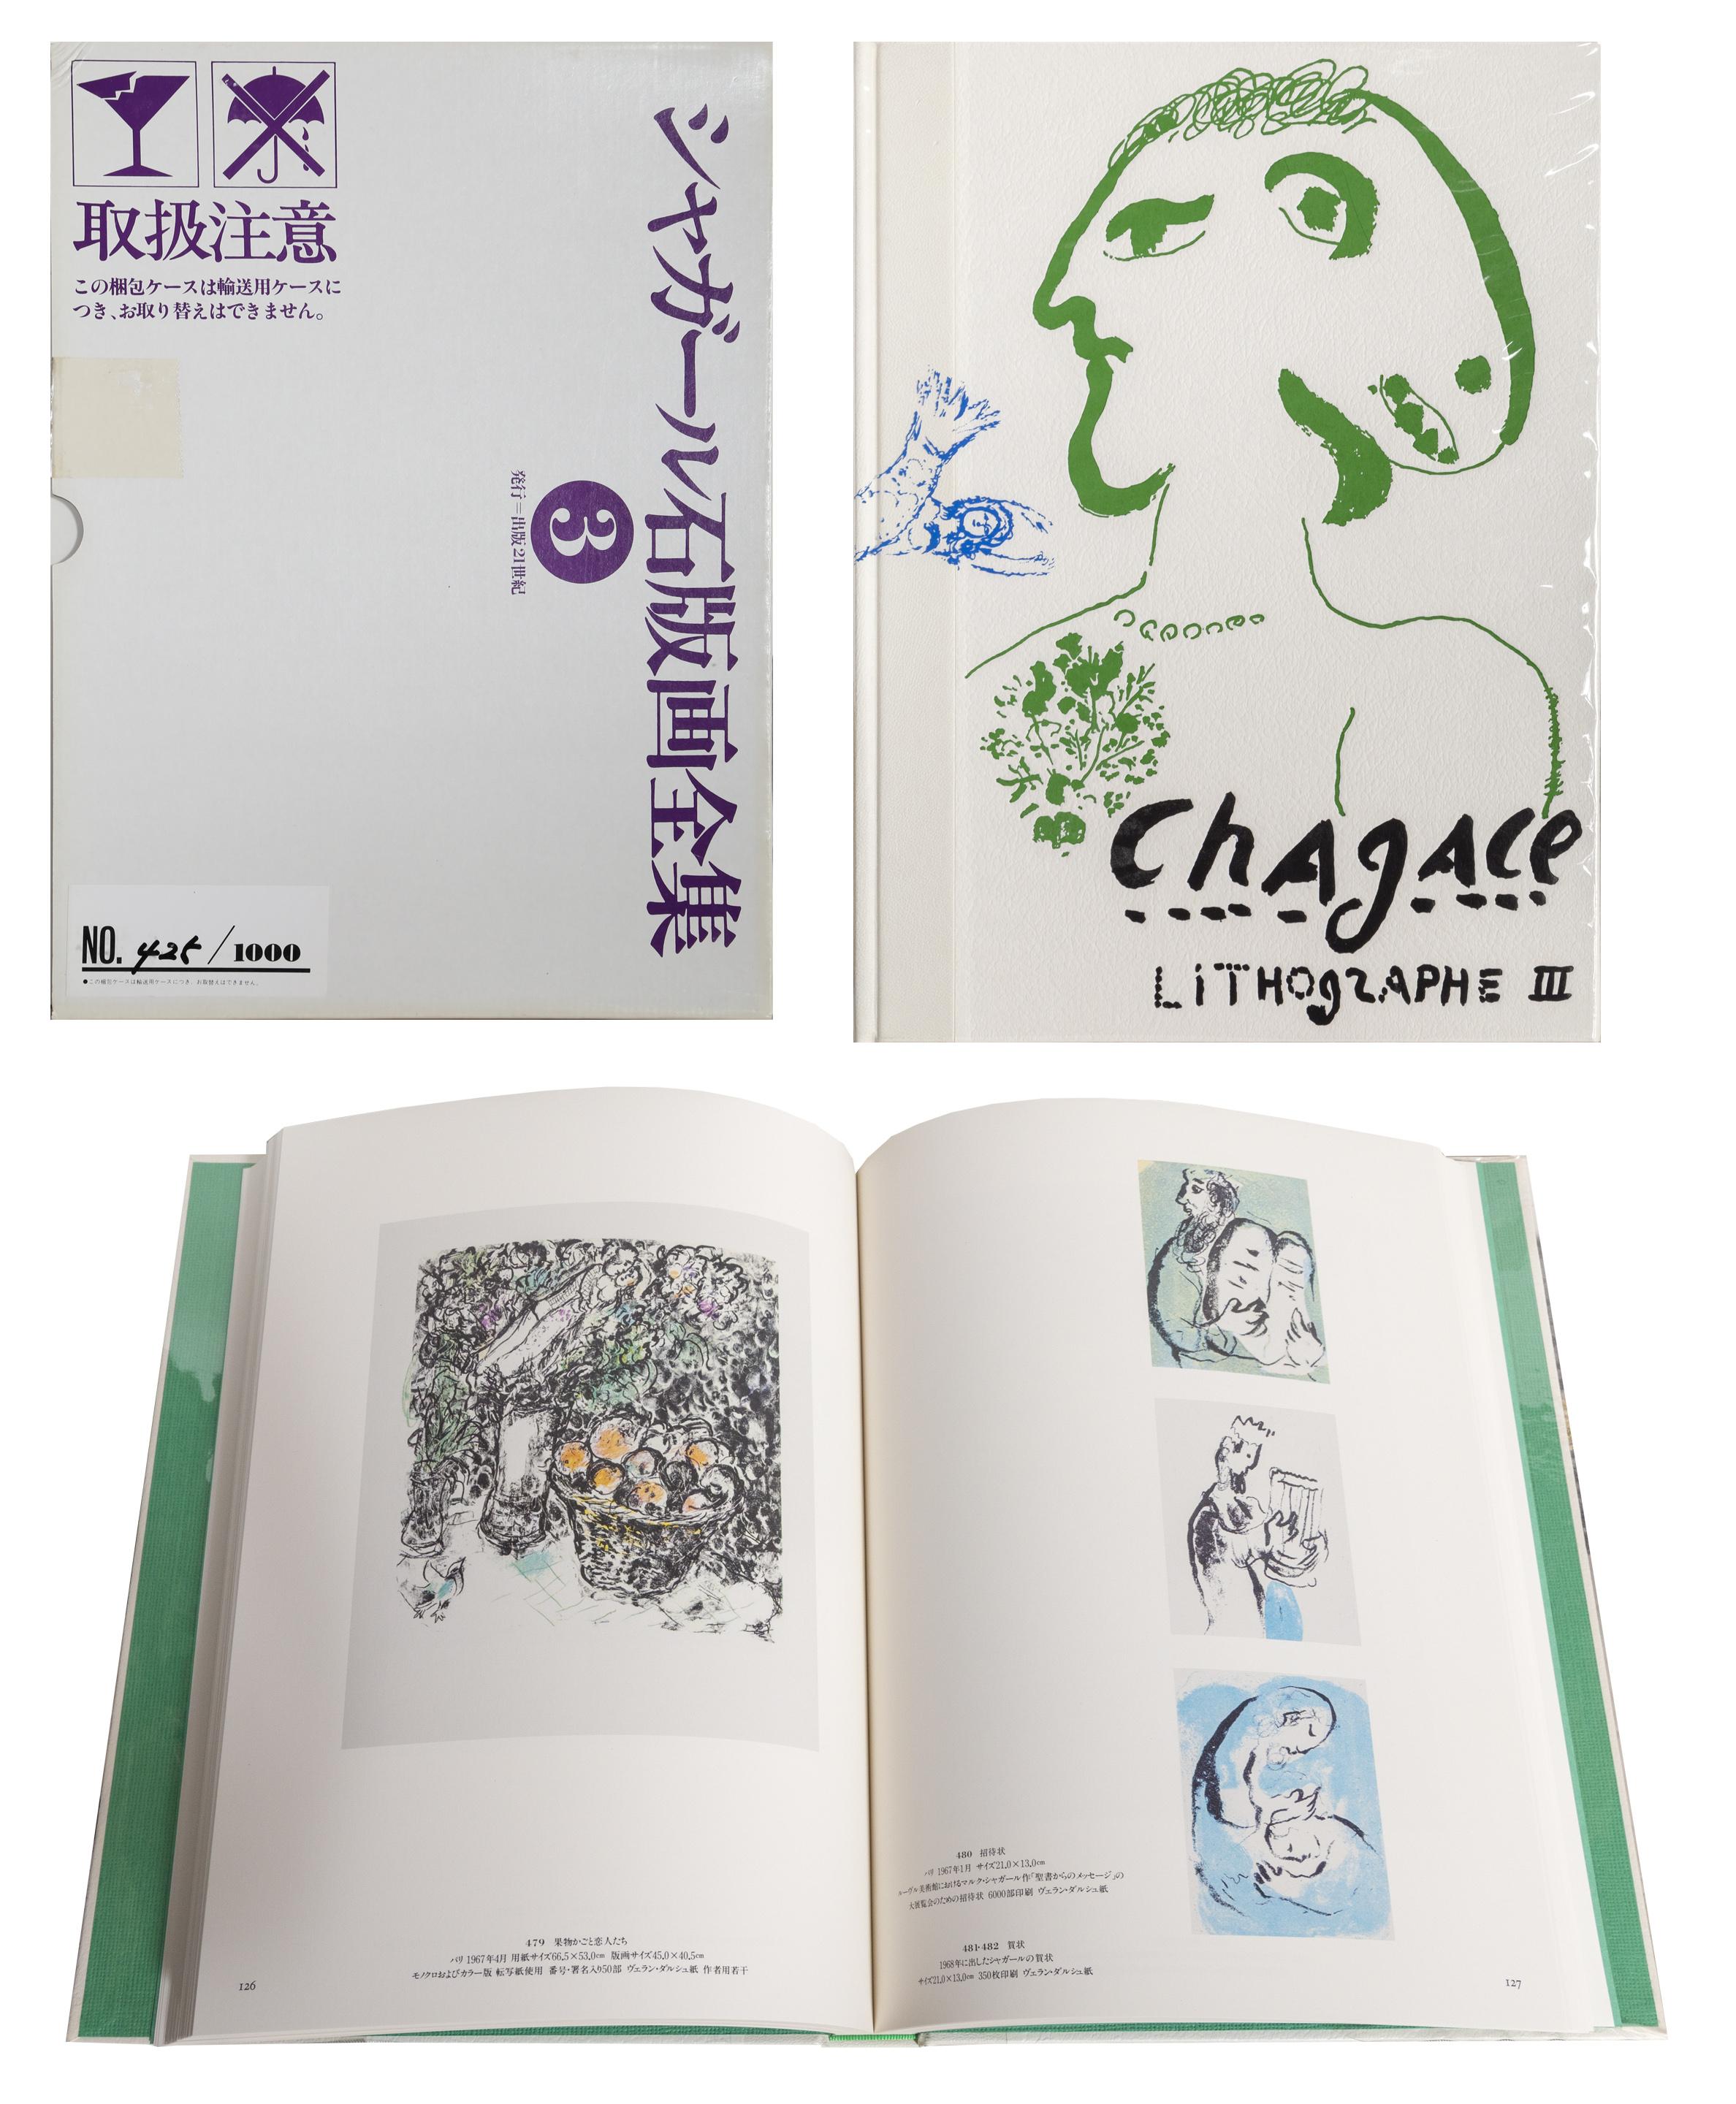 Artist: Marc Chagall, Russian (1887 - 1985)
Title: Chagall Lithographe Volumes I, II, III, IV & Les Affiches de Marc Chagall by Cain, Julien, Fernand Mourlot, Charles Sorlier, Robert Marteau, Roger Passeron, Leopold Sedar Senghor, Jean Adhemar &